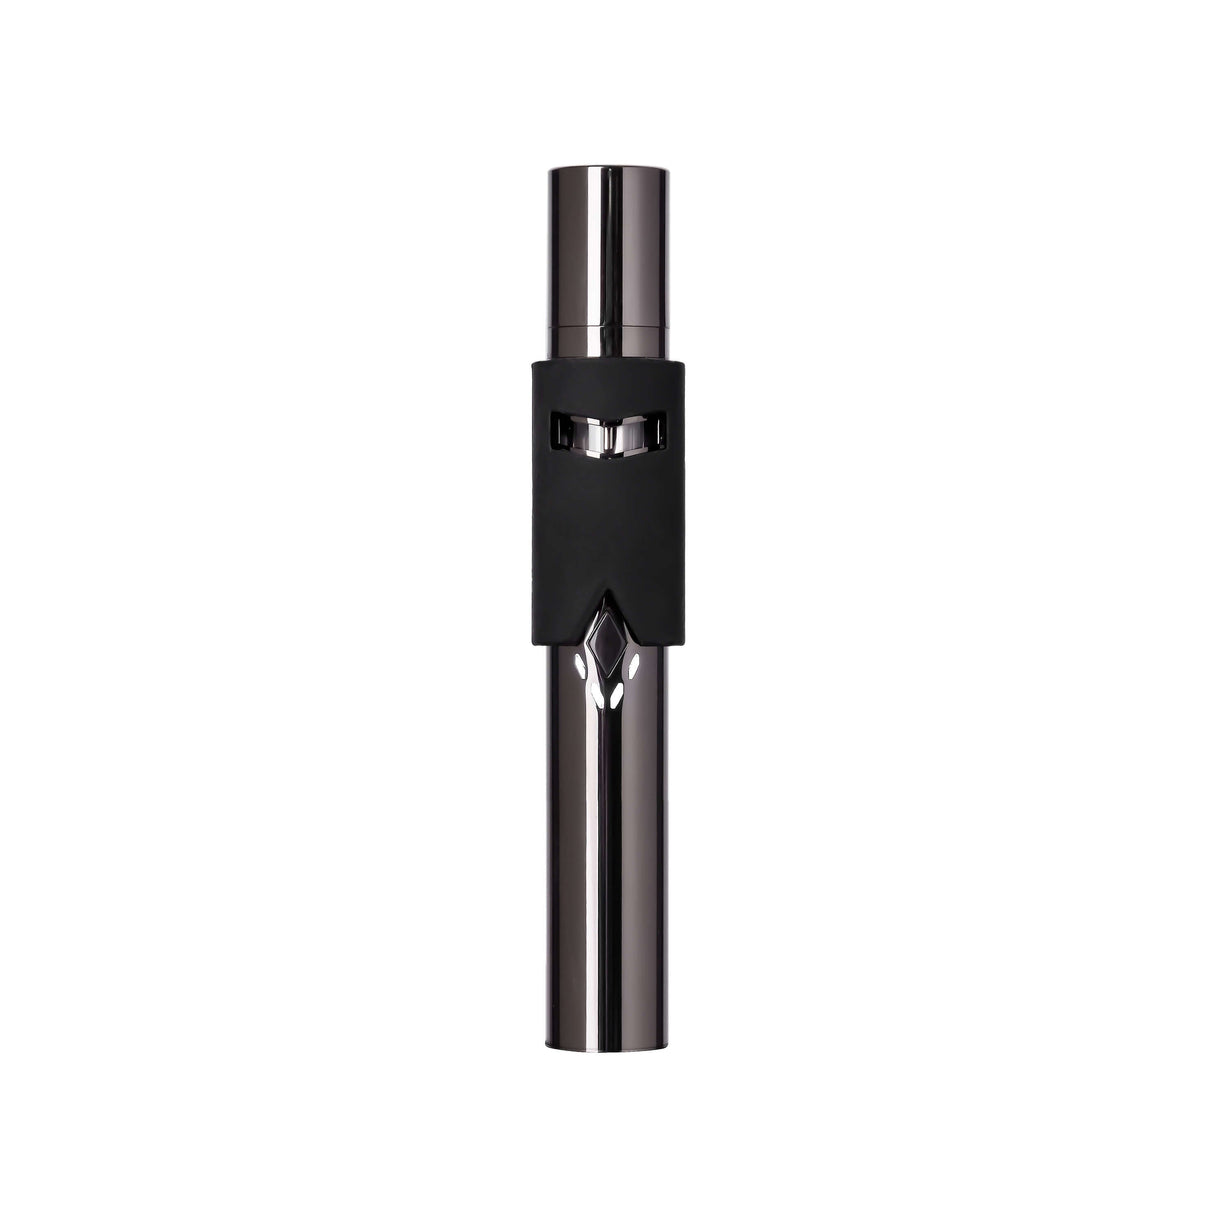 VLAB VLEX Vape Pen Kit in sleek black - Front View - Compact and Portable Design